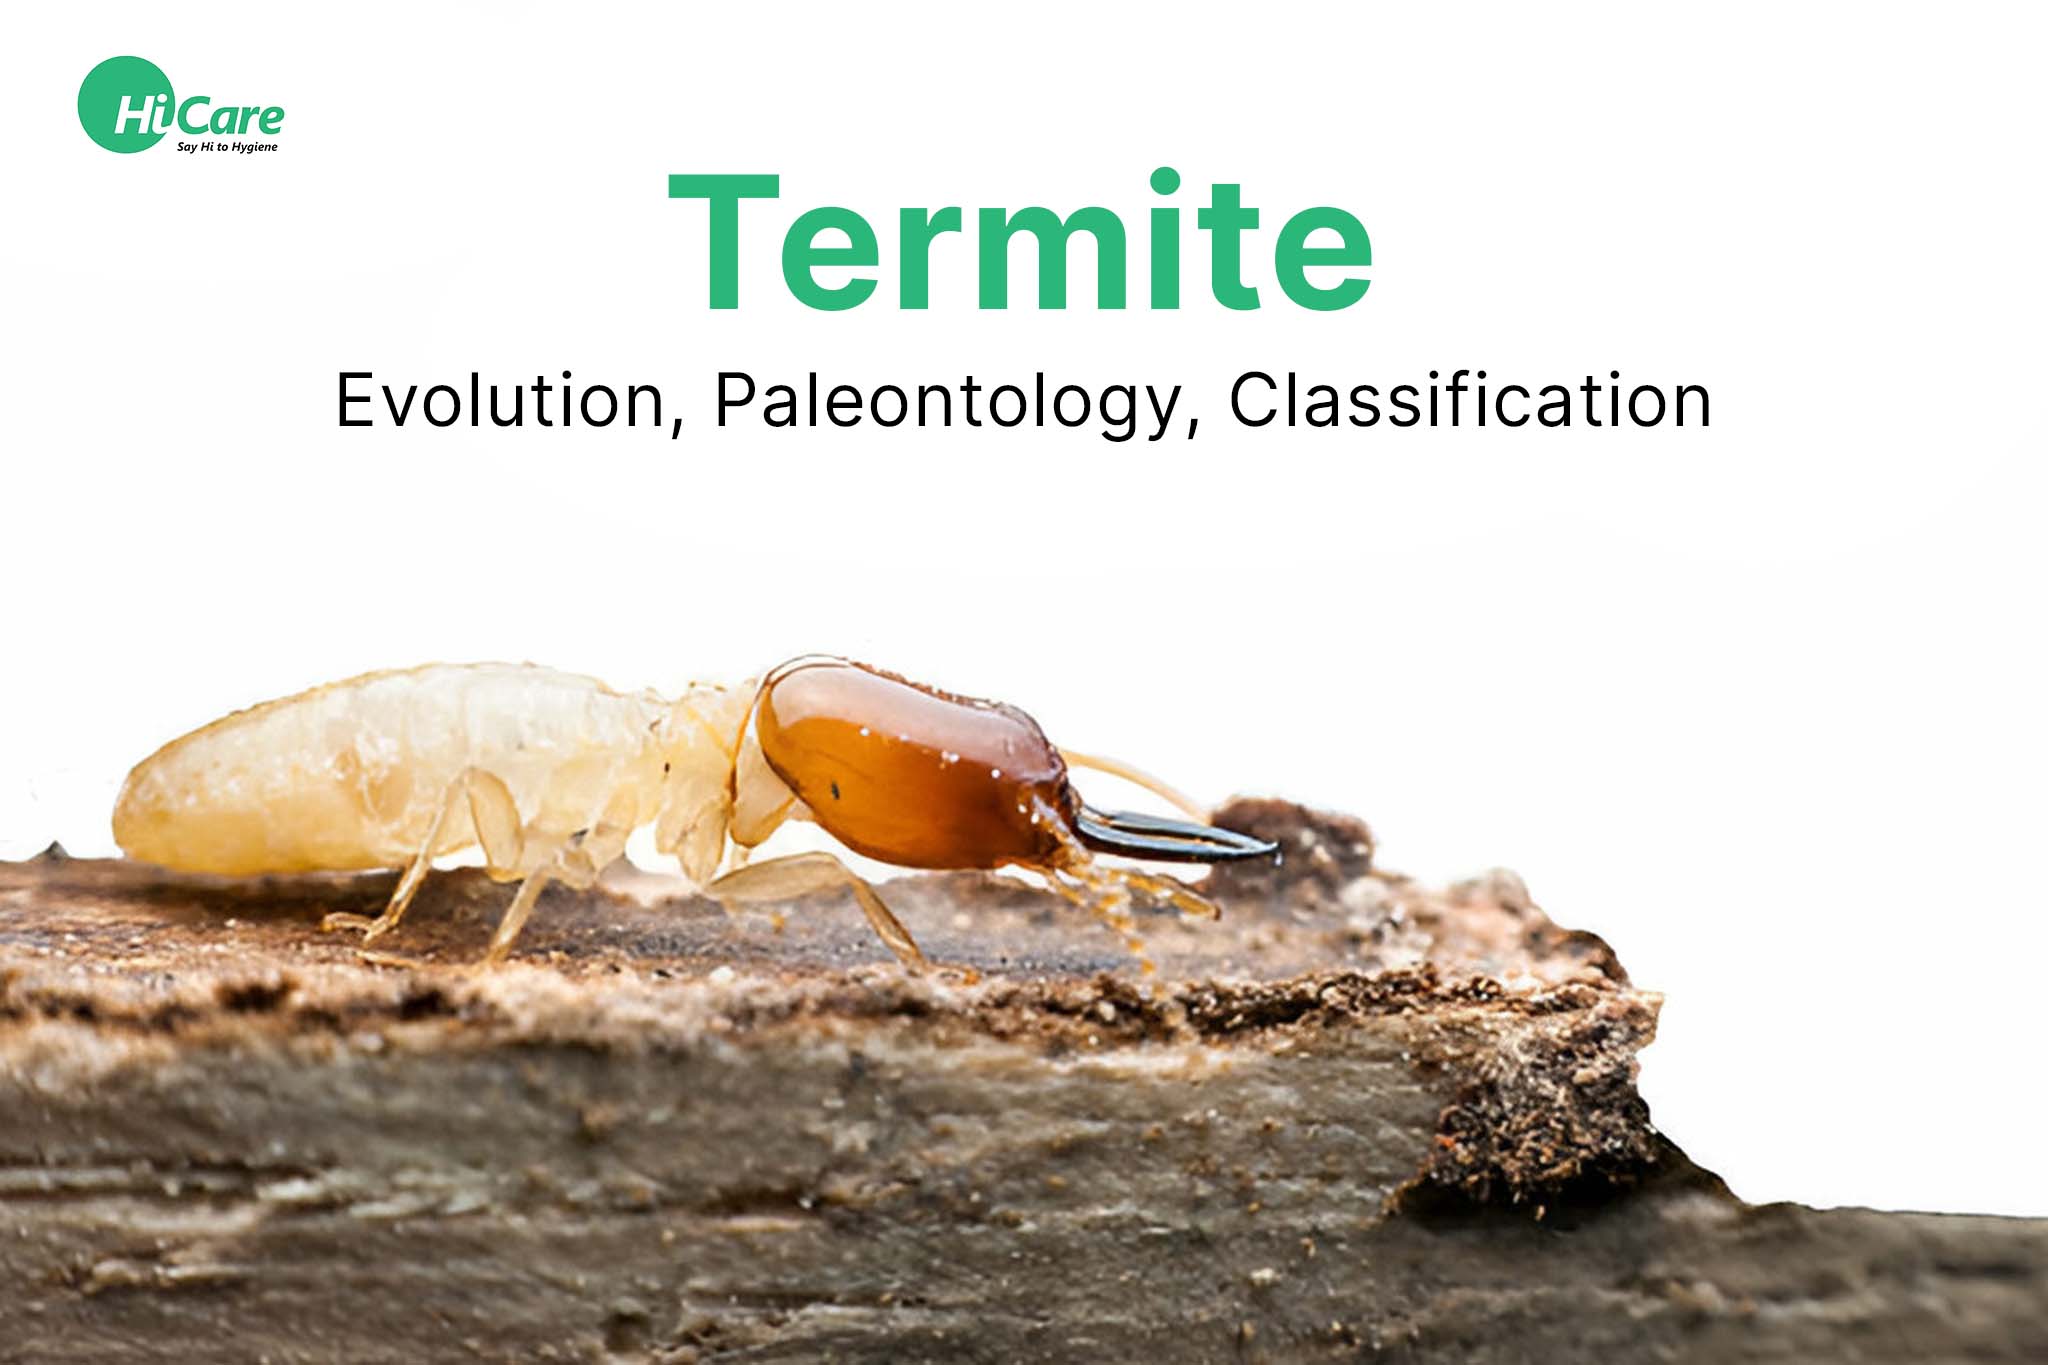 Termite – Evolution, Paleontology, Classification